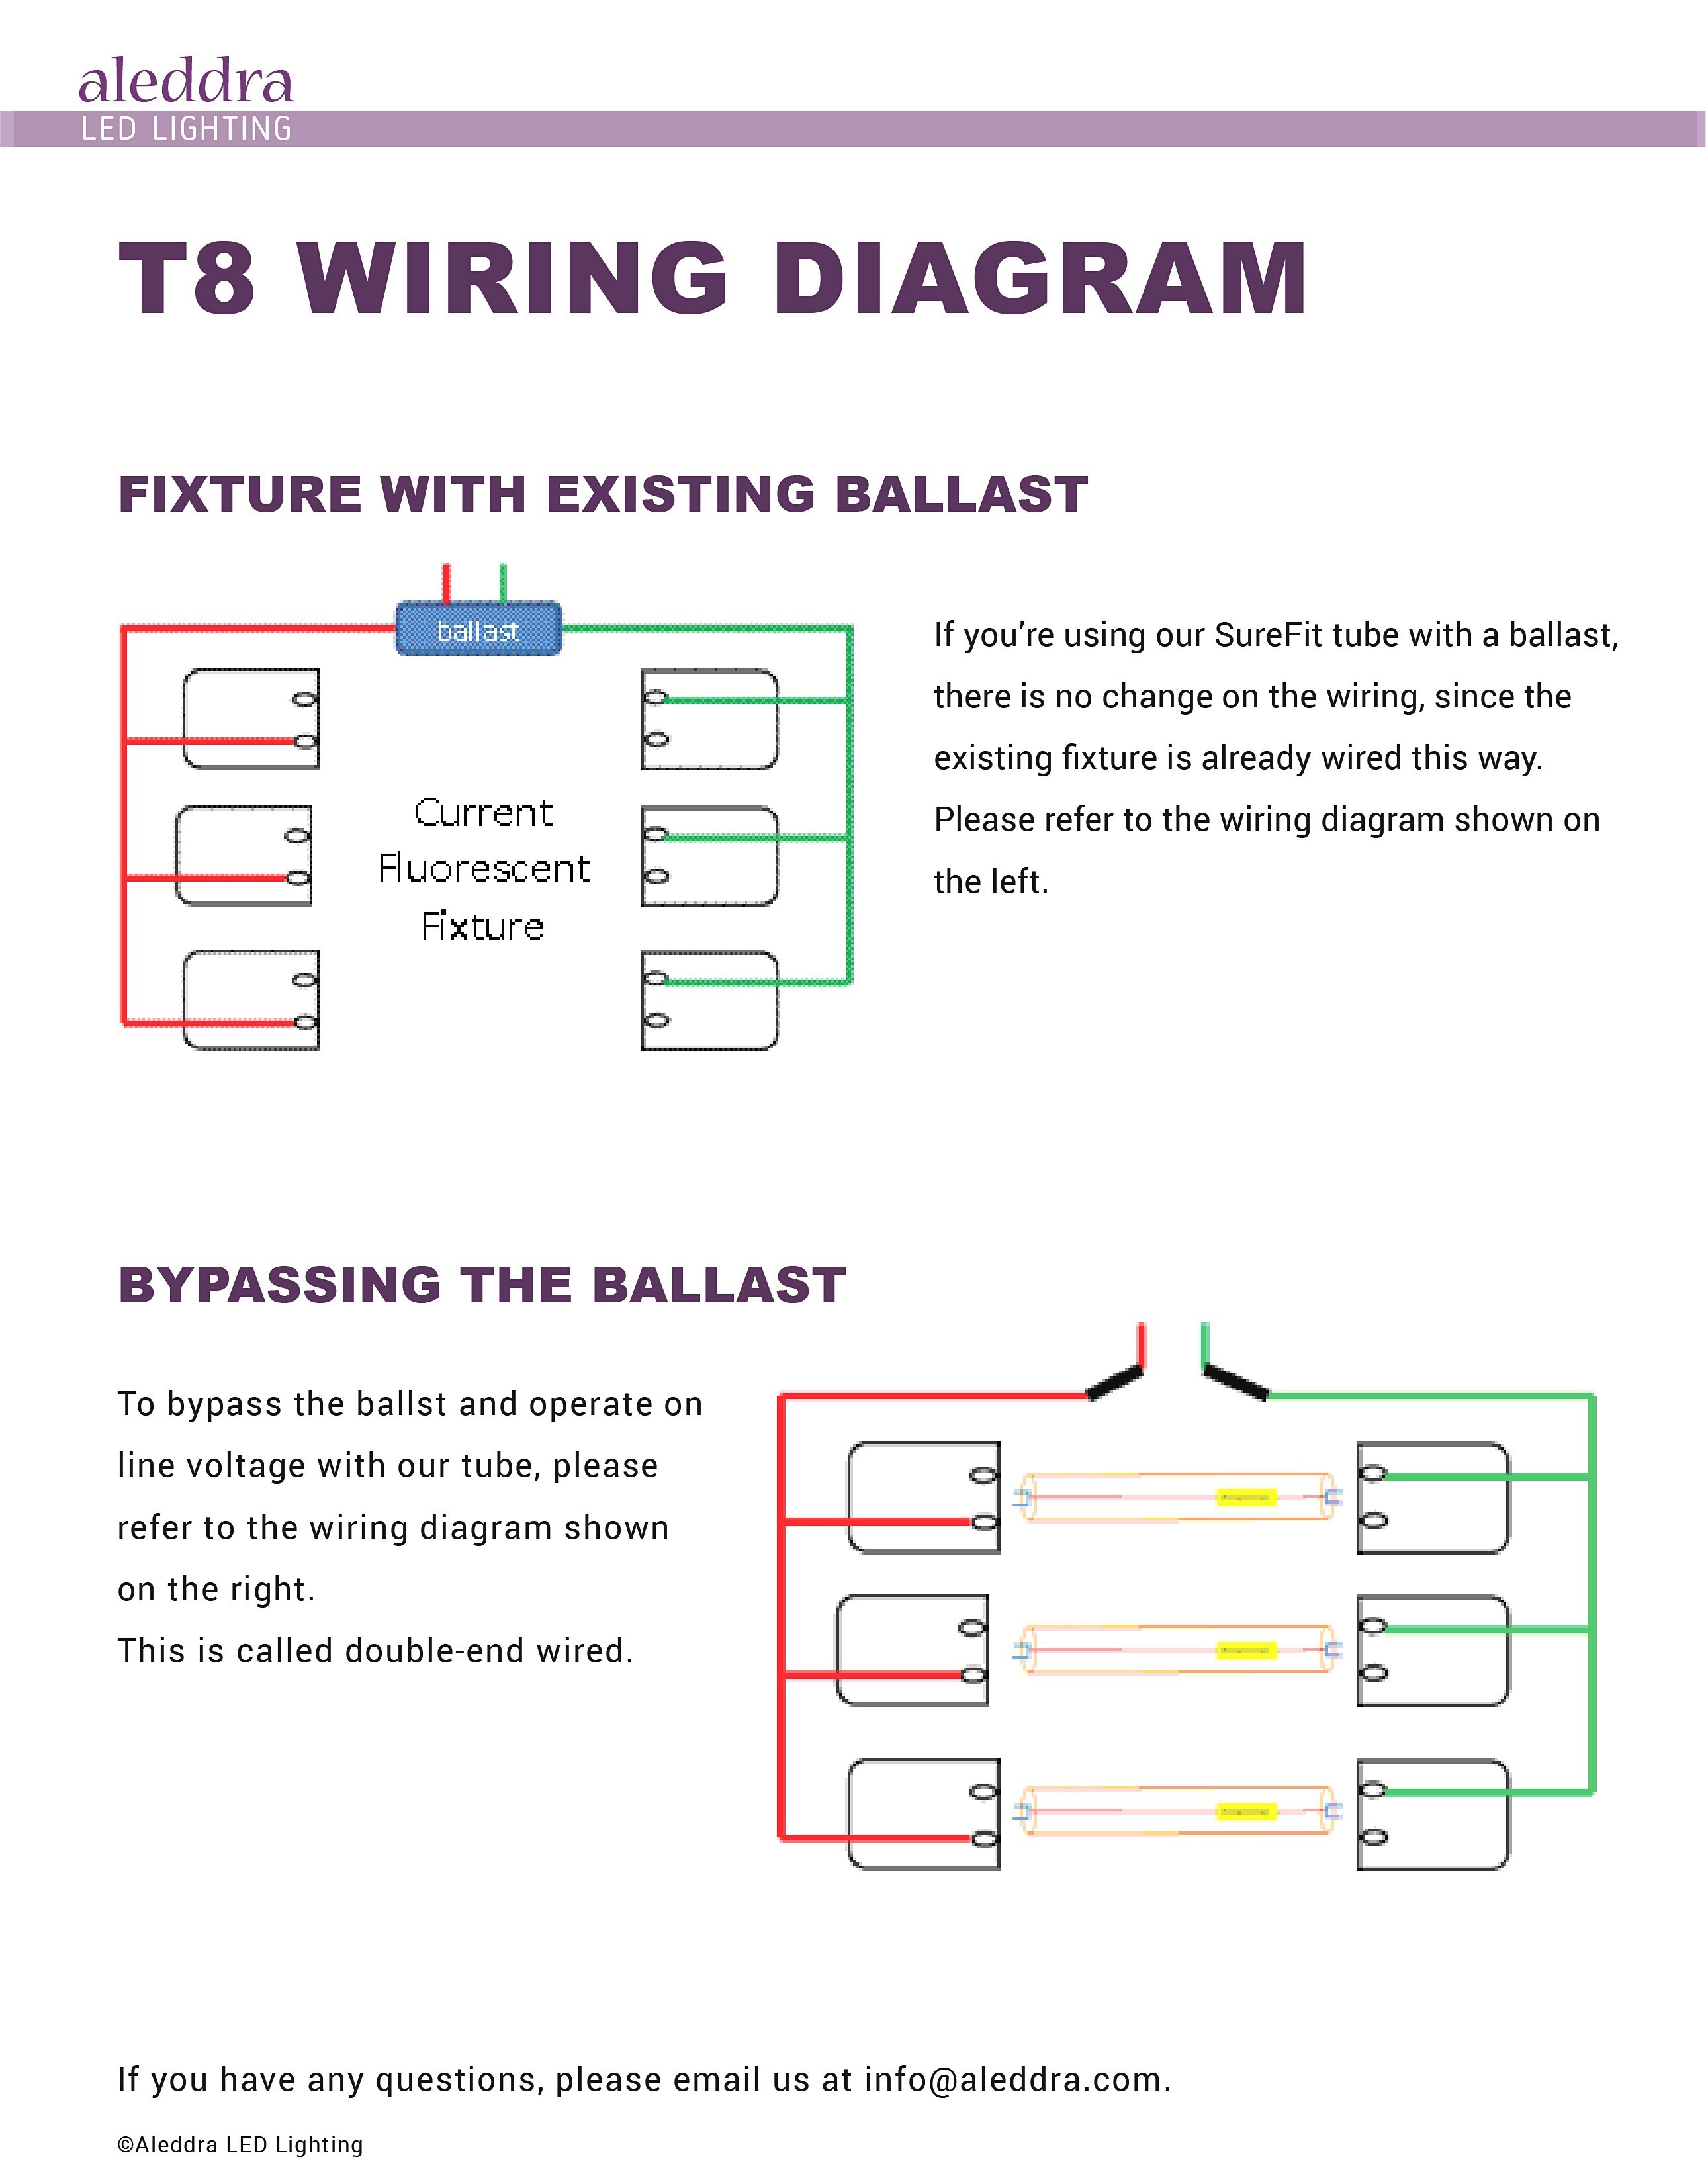 Wiring Diagram for Under Cabinet Lighting Save Inspirational How to Wire Under Cabinet Lighting Diagram Diagram